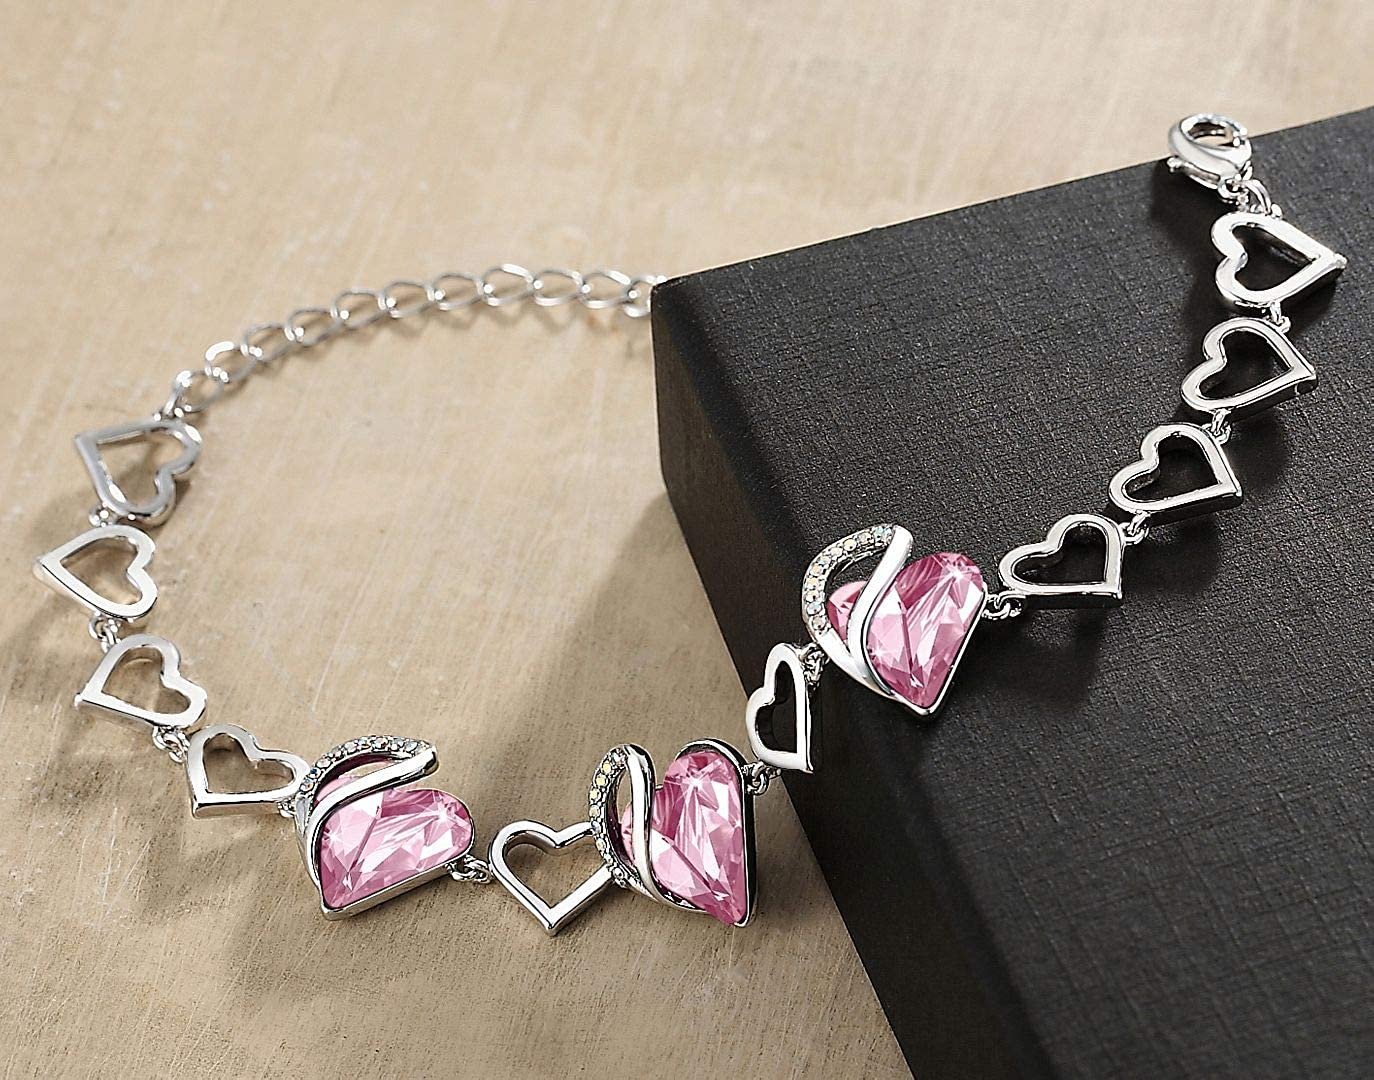 Leafael Heart Infinity Link Leafael Crystal, Birthstone Jewelry Wom – Bracelet Love with